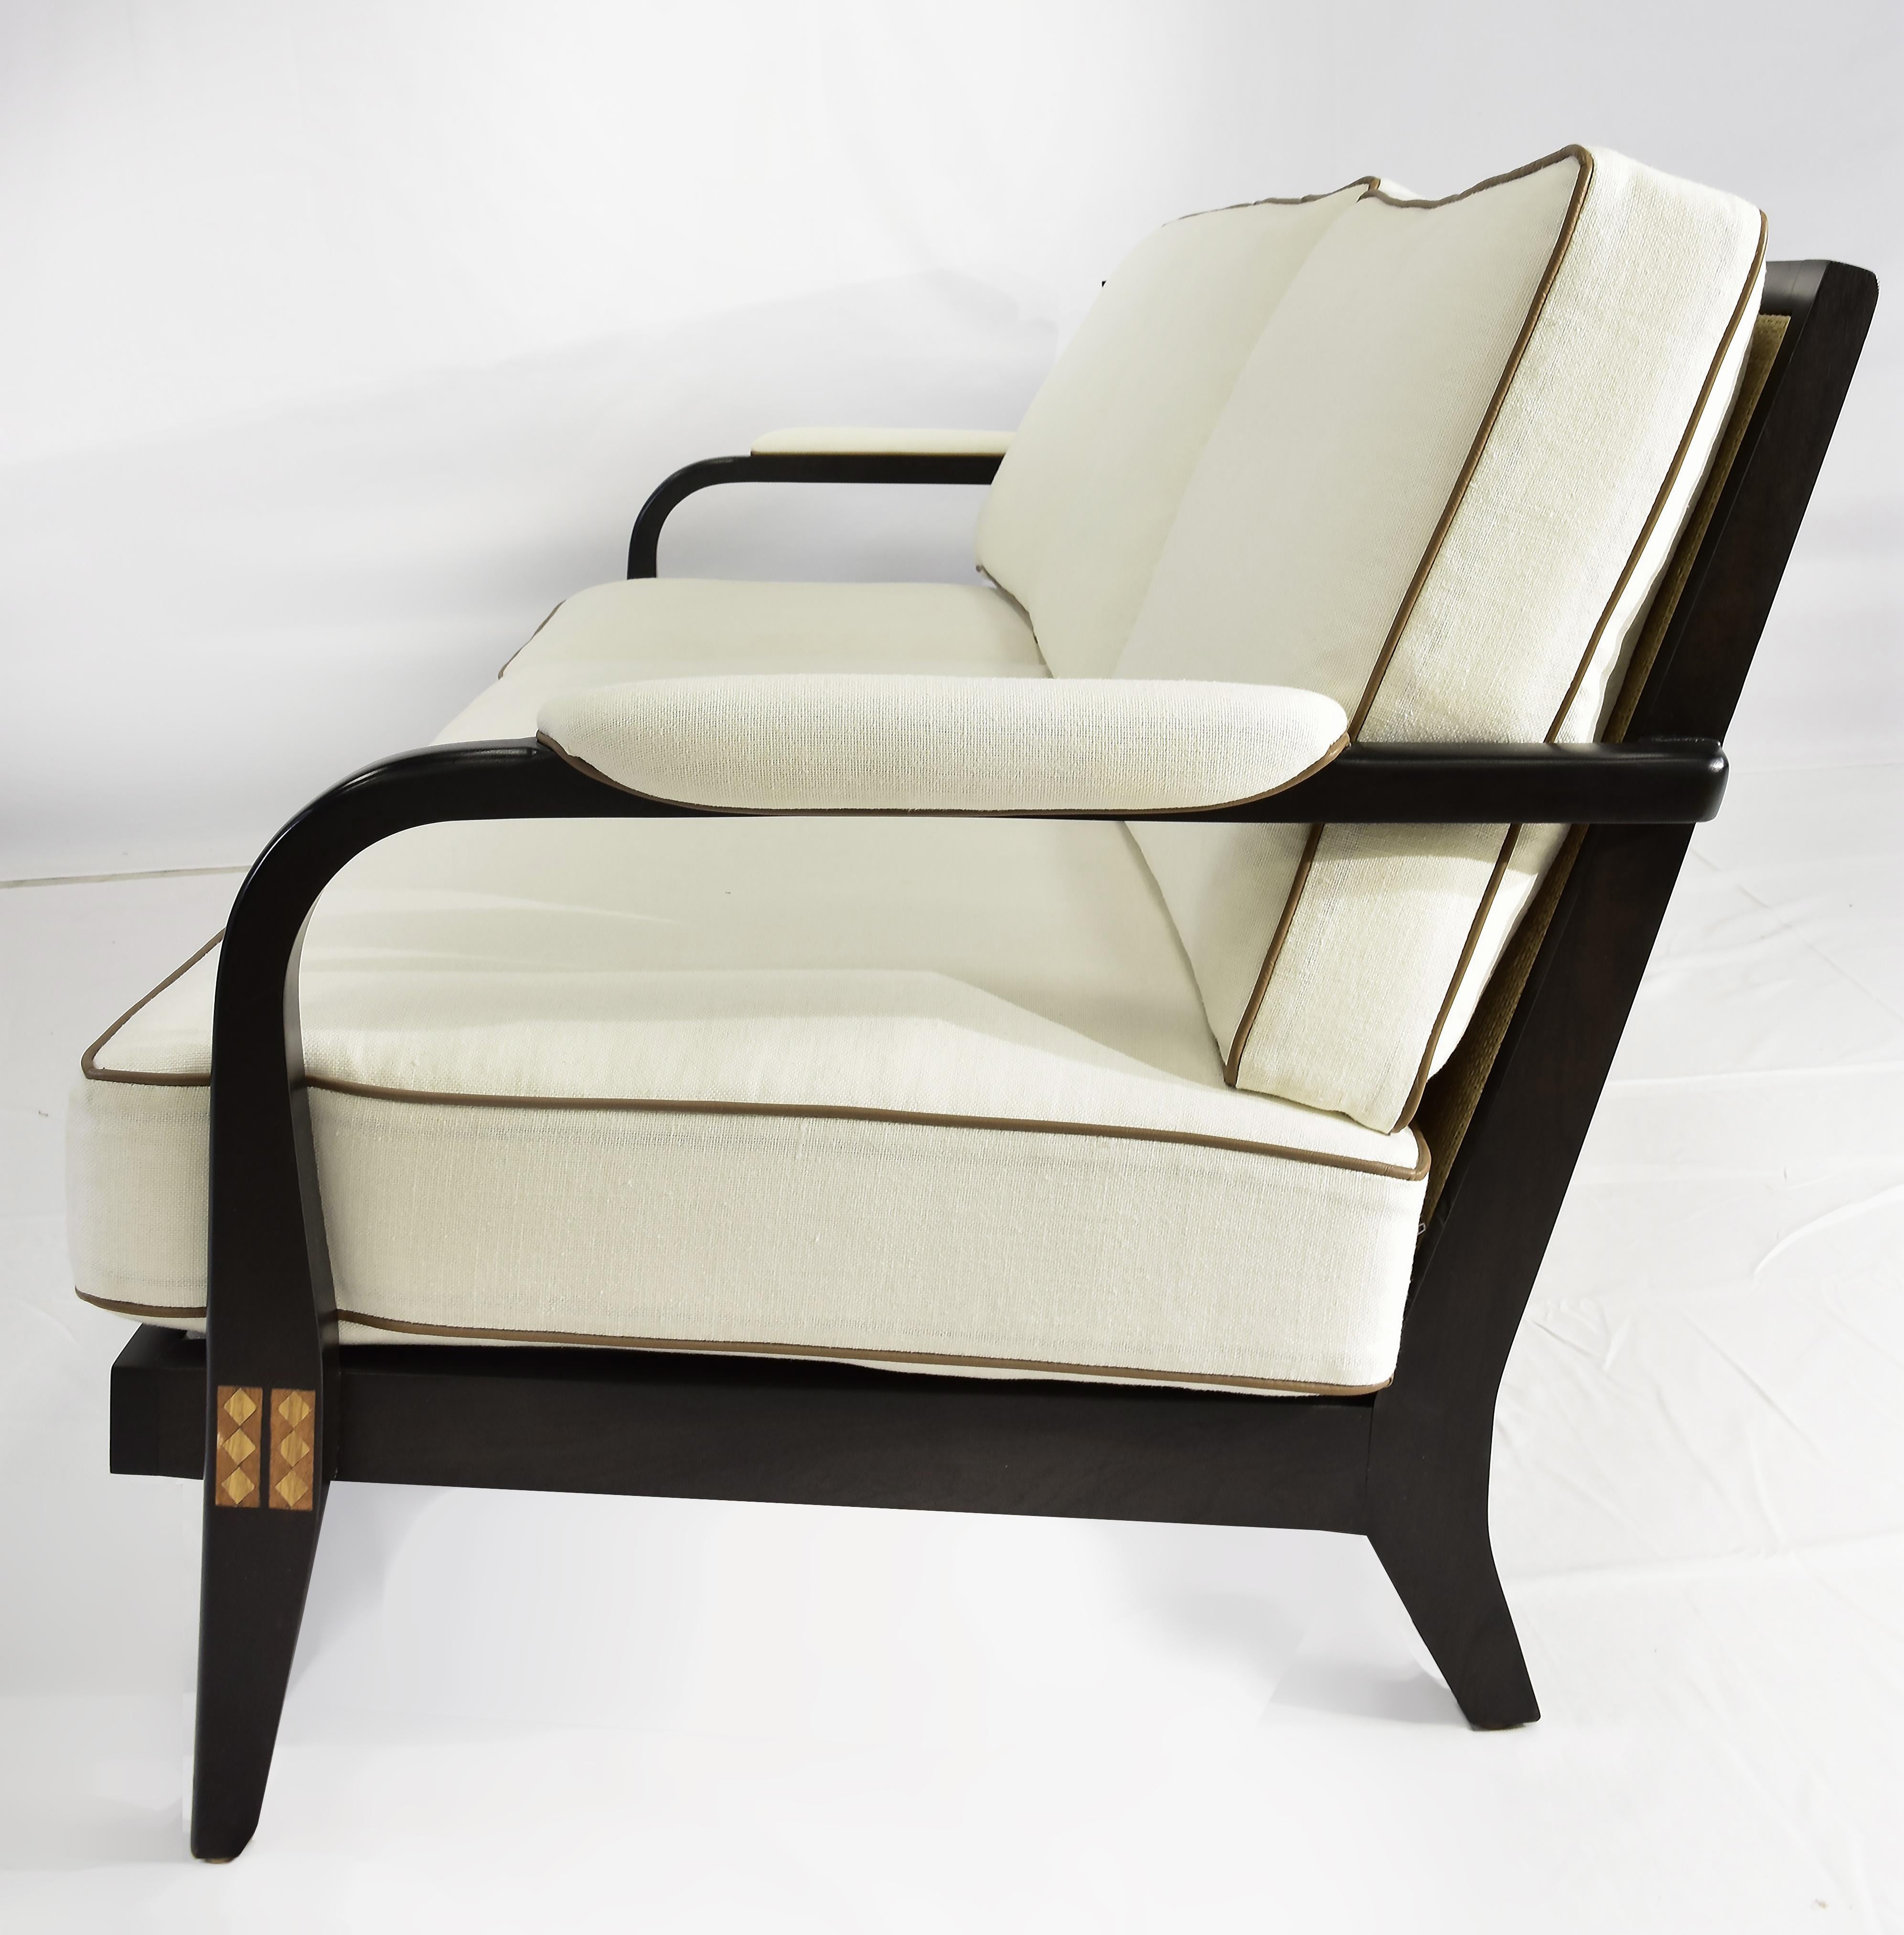 Veneer Le June Upholstery 3 Seat Club Havana Sofa Floor Model, Walnut Finished Mahogany For Sale